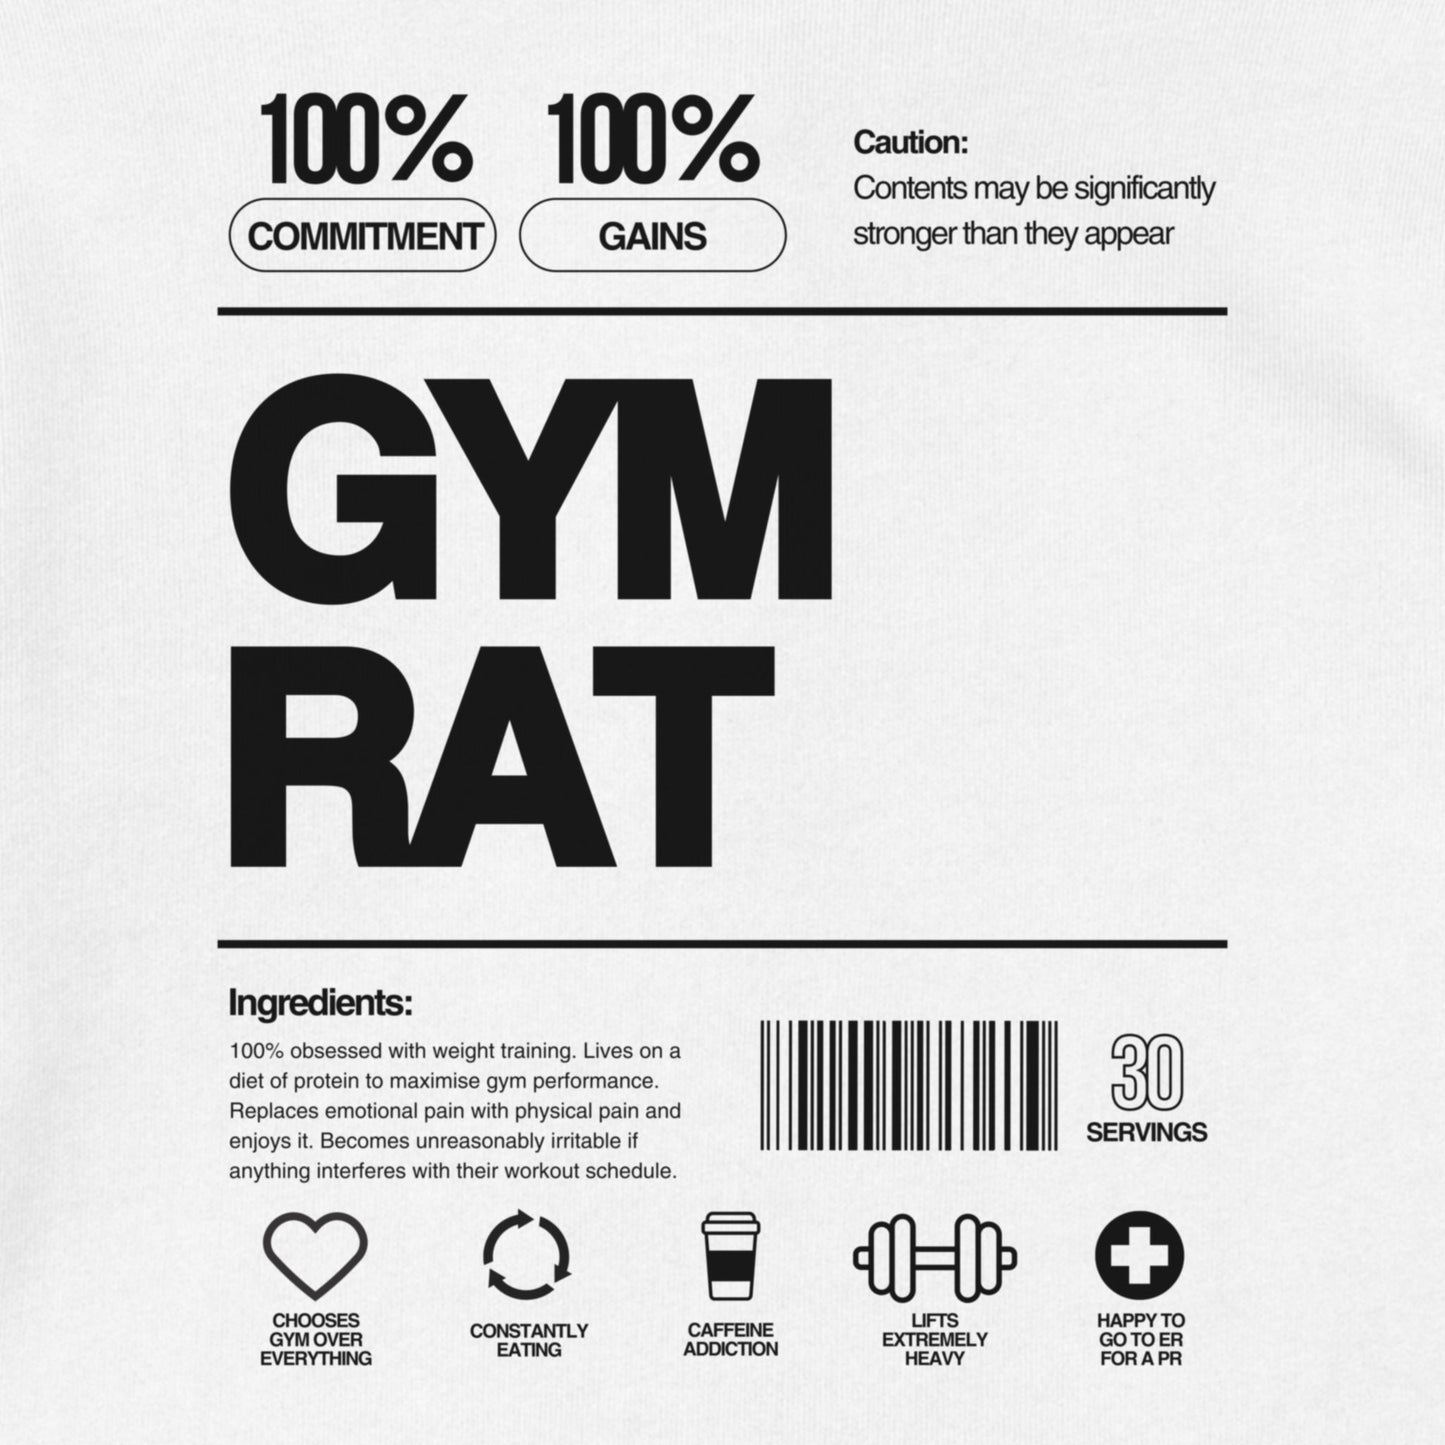 Gym Rat Hoodie White